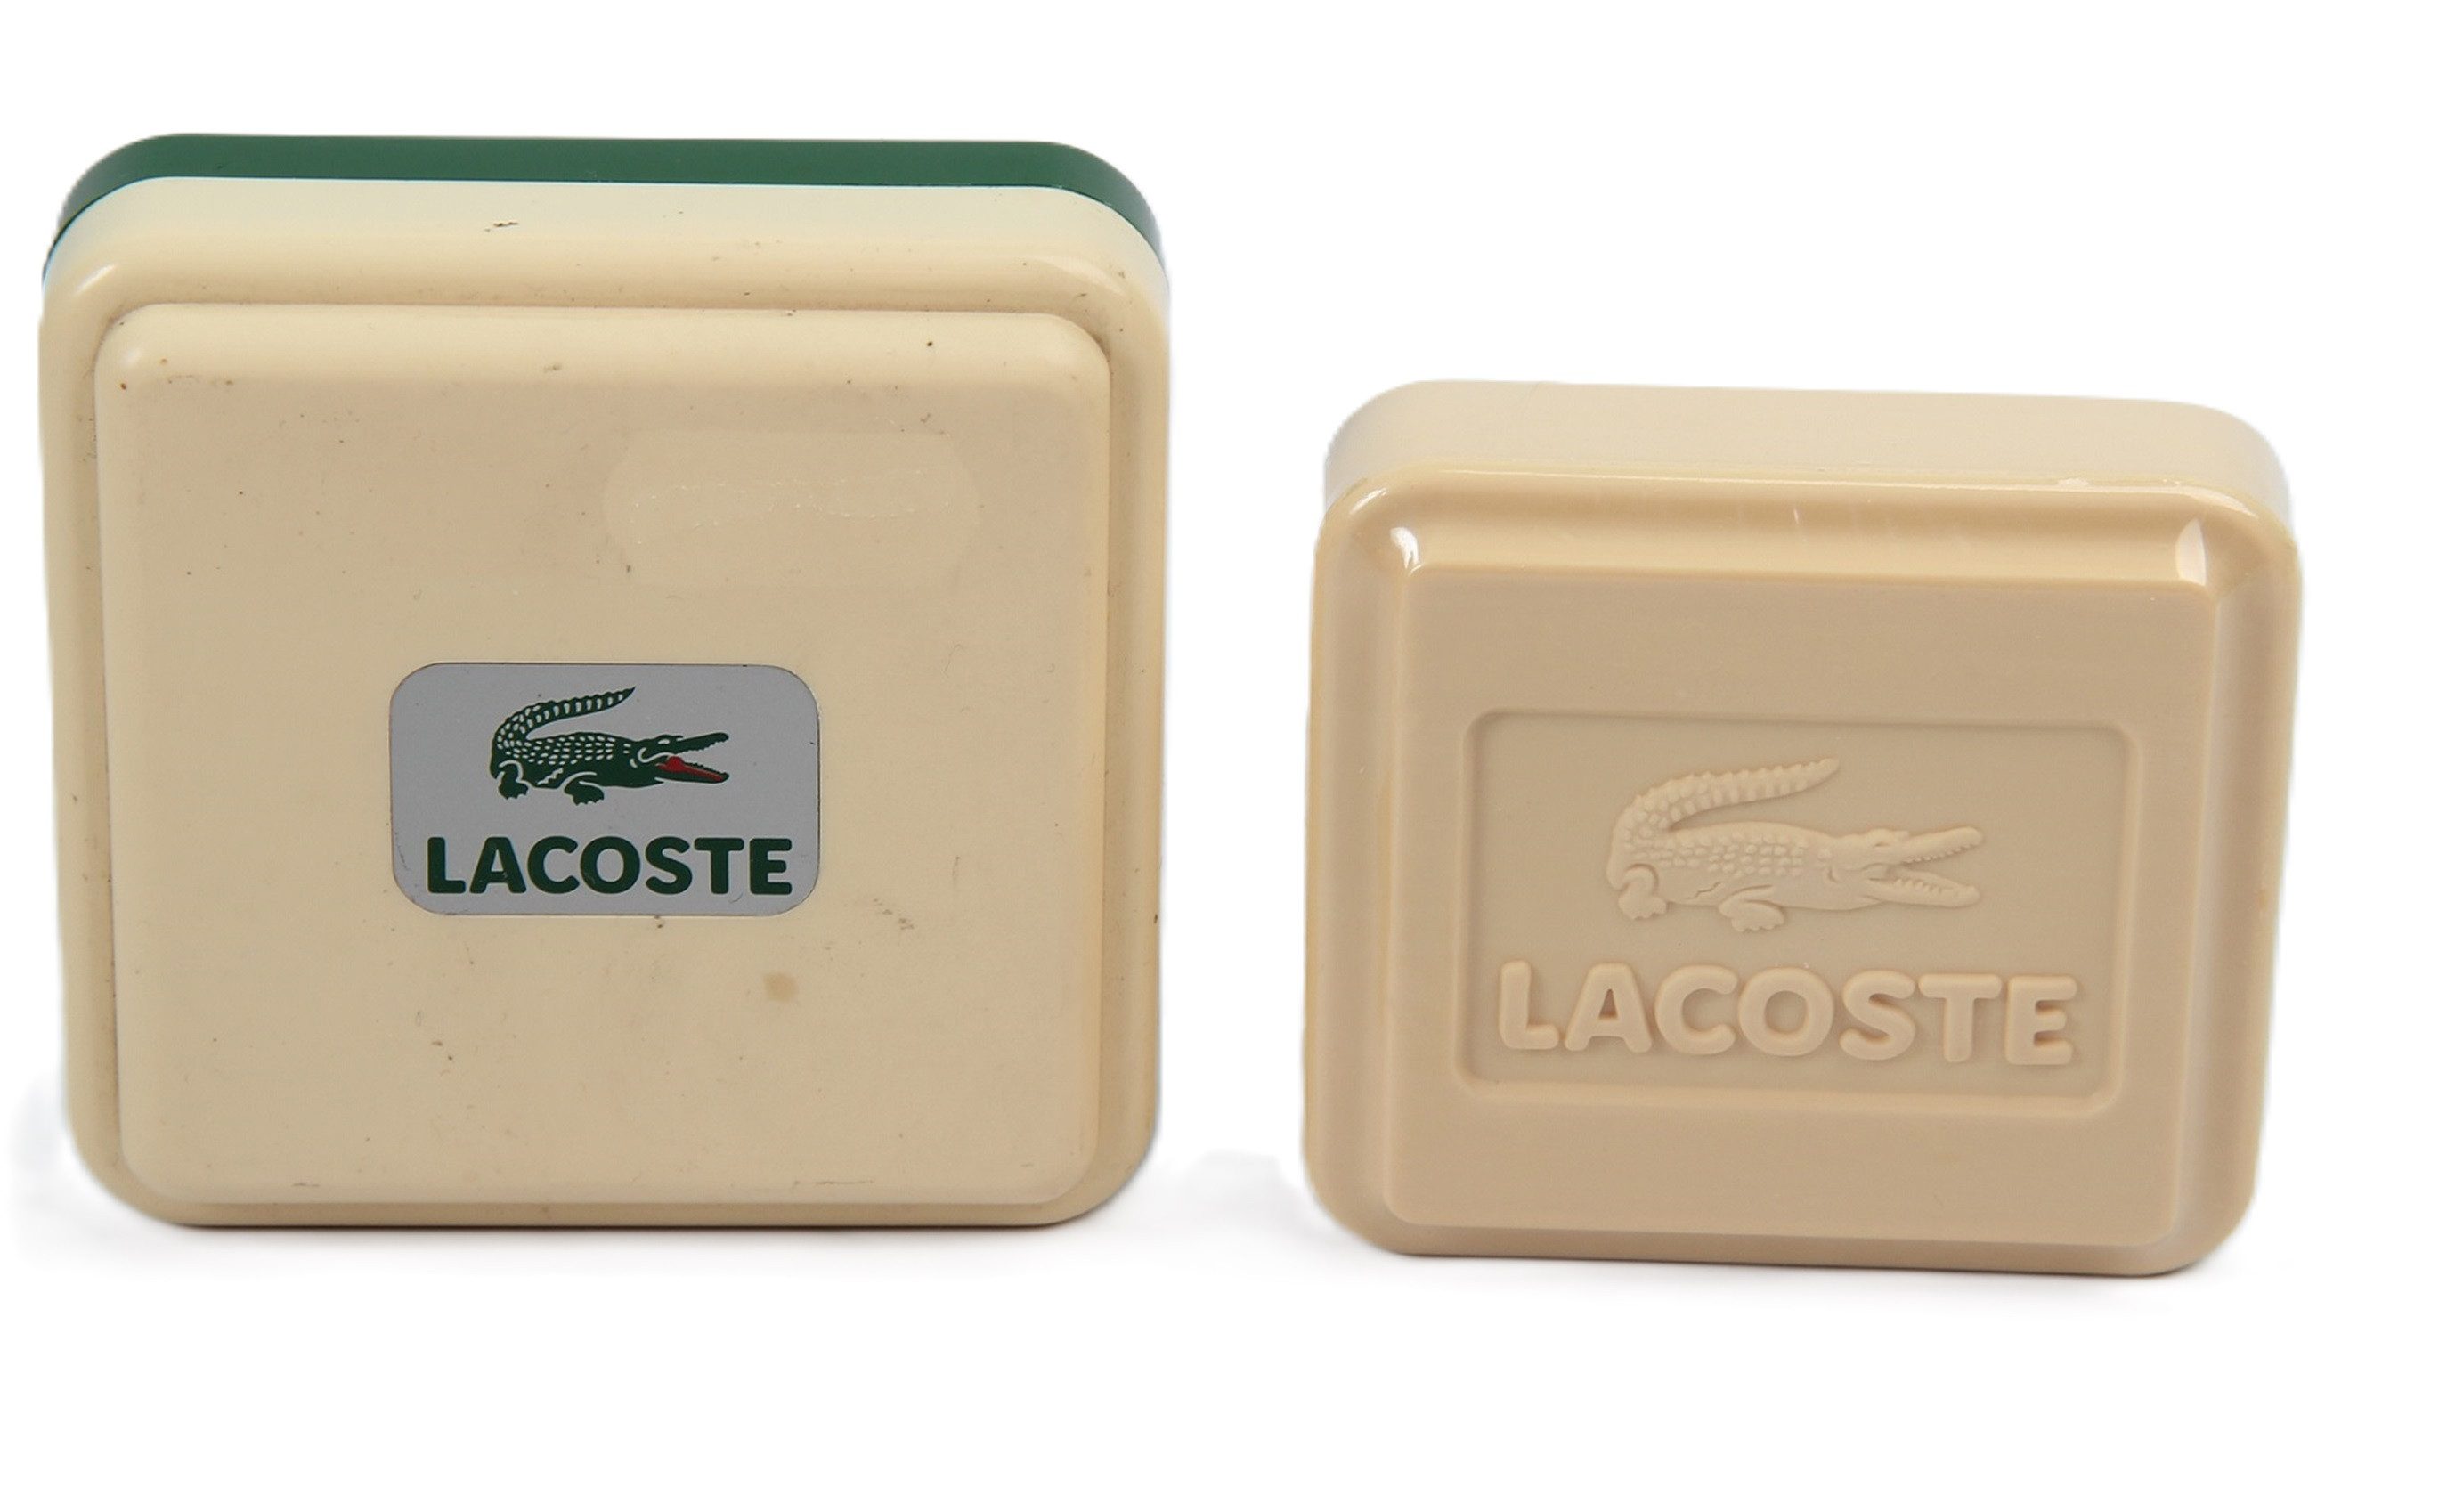 Lacoste Handseife Lacoste Original Seife / savon soap 100g